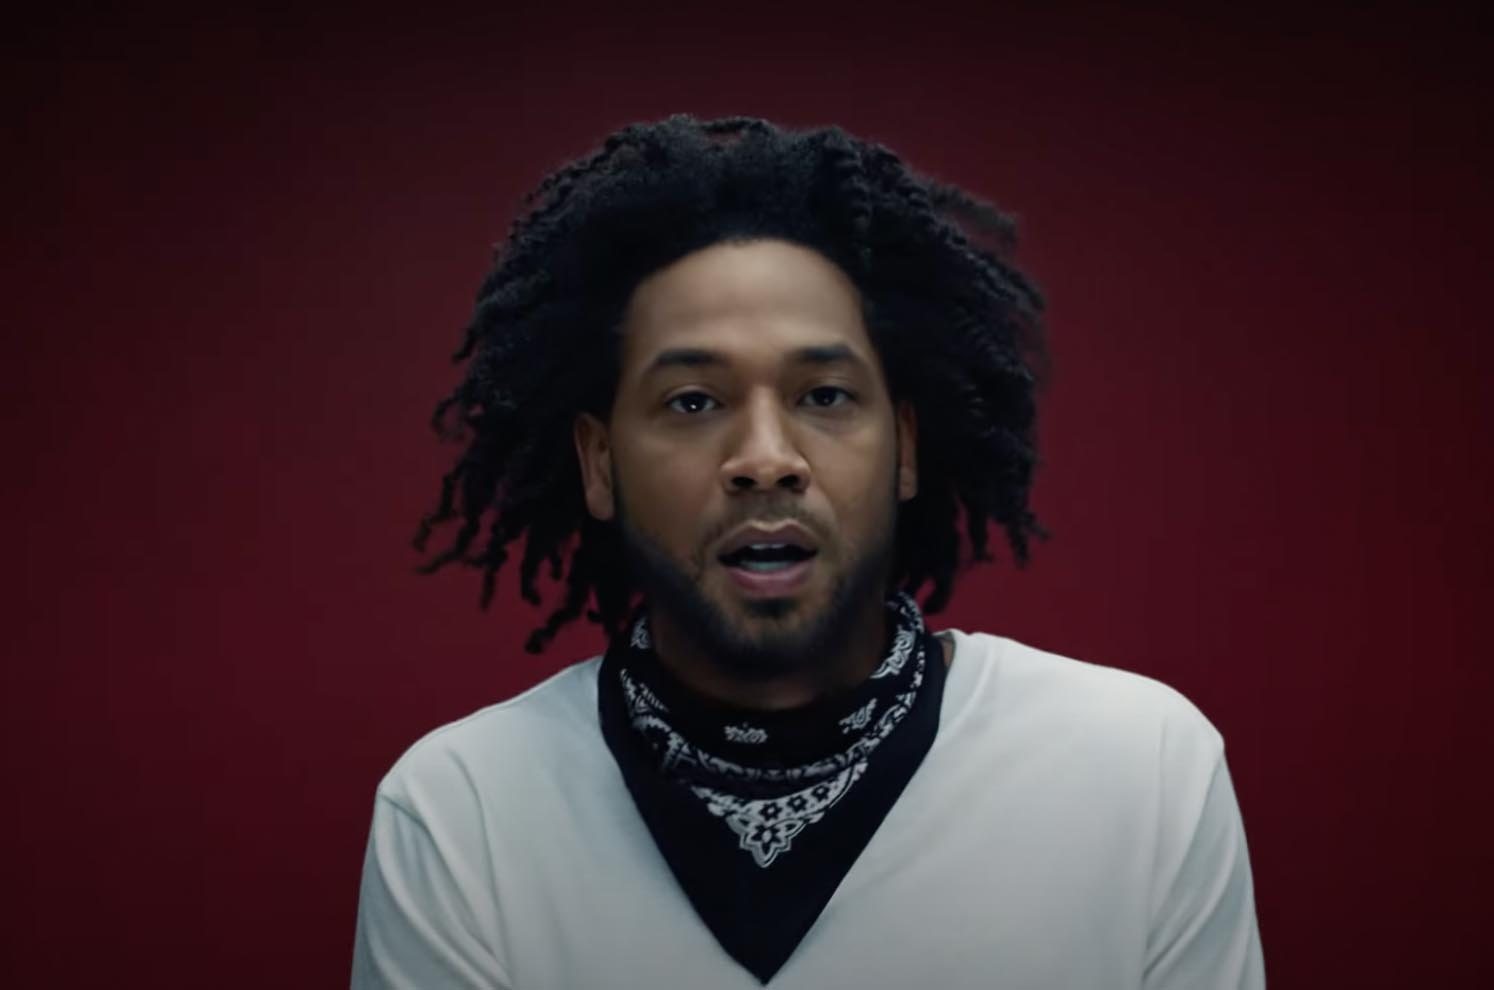 Kendrick Lamar Jussie Smollett Will Smith OJ Simpson Kanye West deepfake The Heart Part 5 video